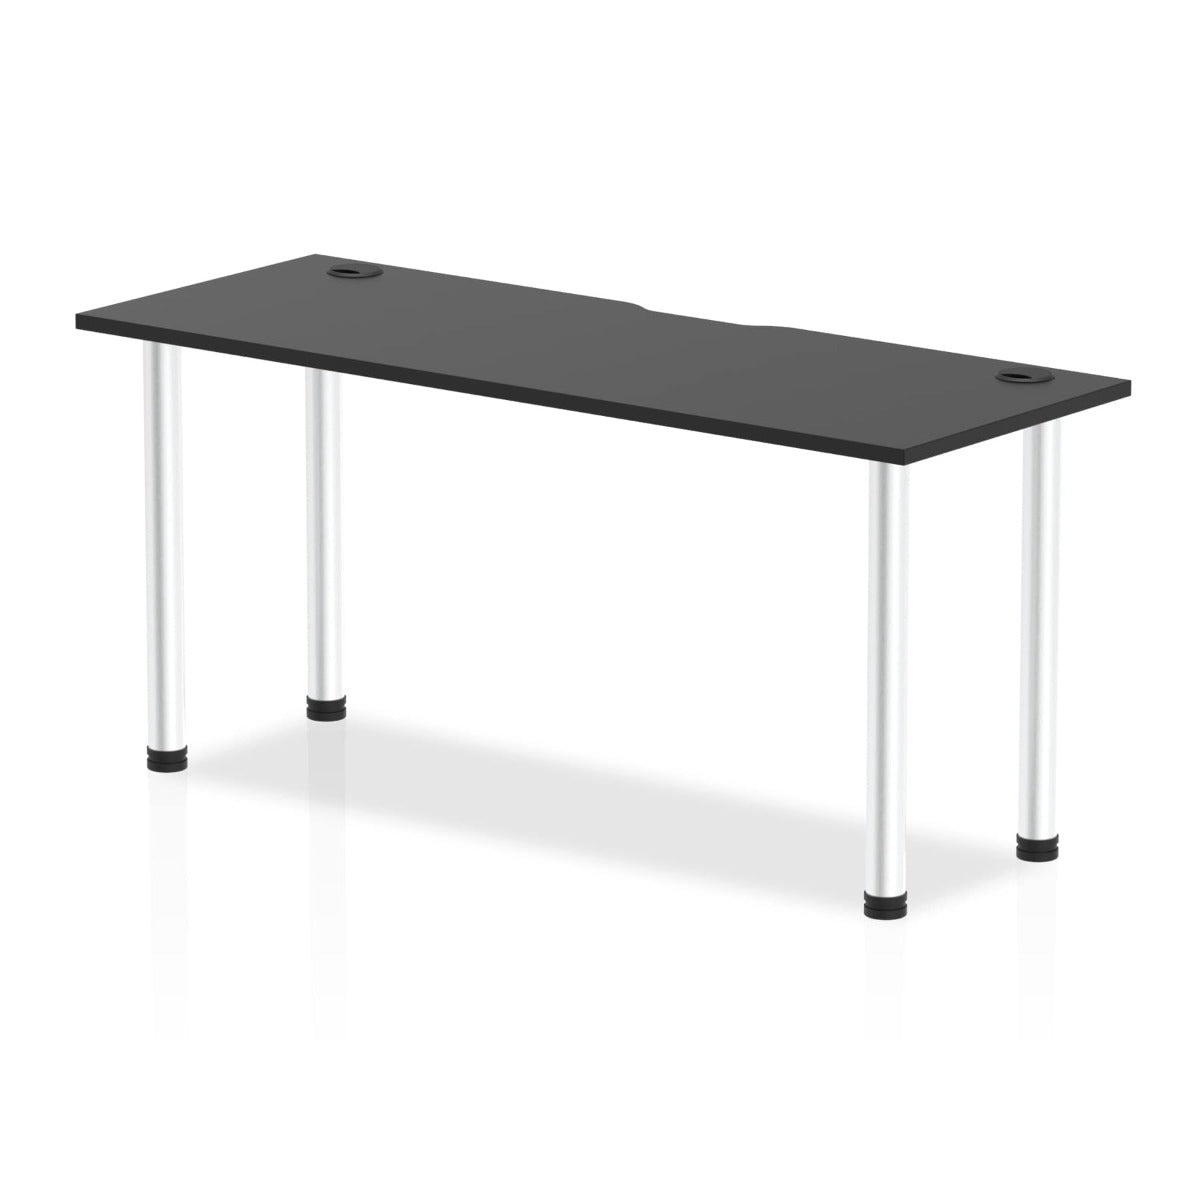 Impulse Black Series Office Desk - Multiple Sizes Available